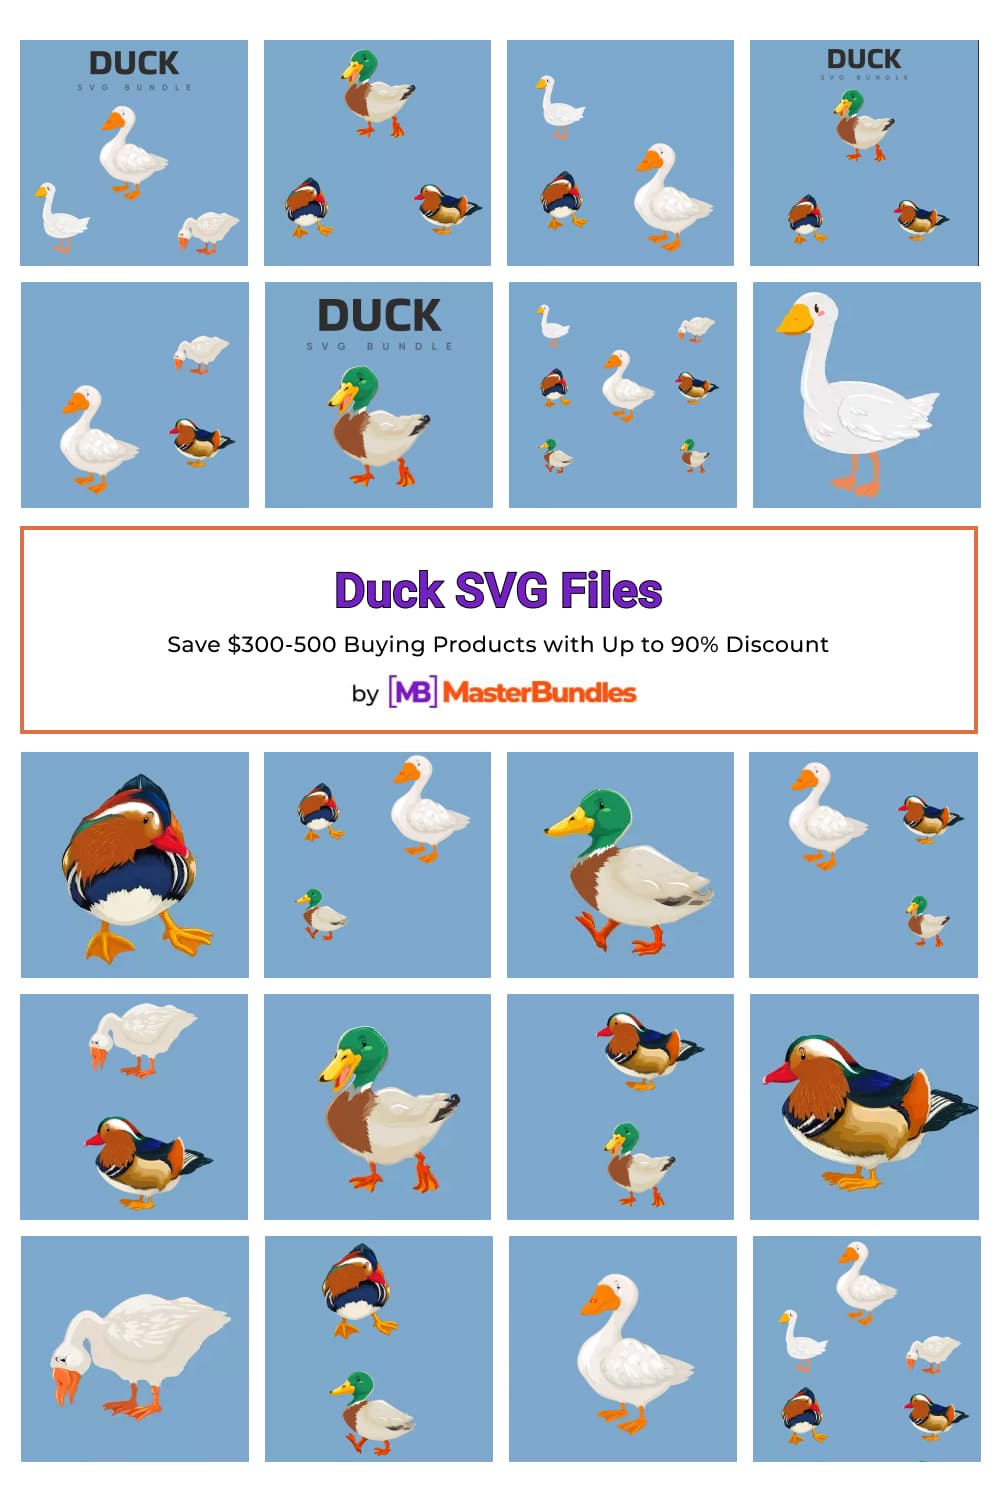 Duck SVG Files Pinterest image.